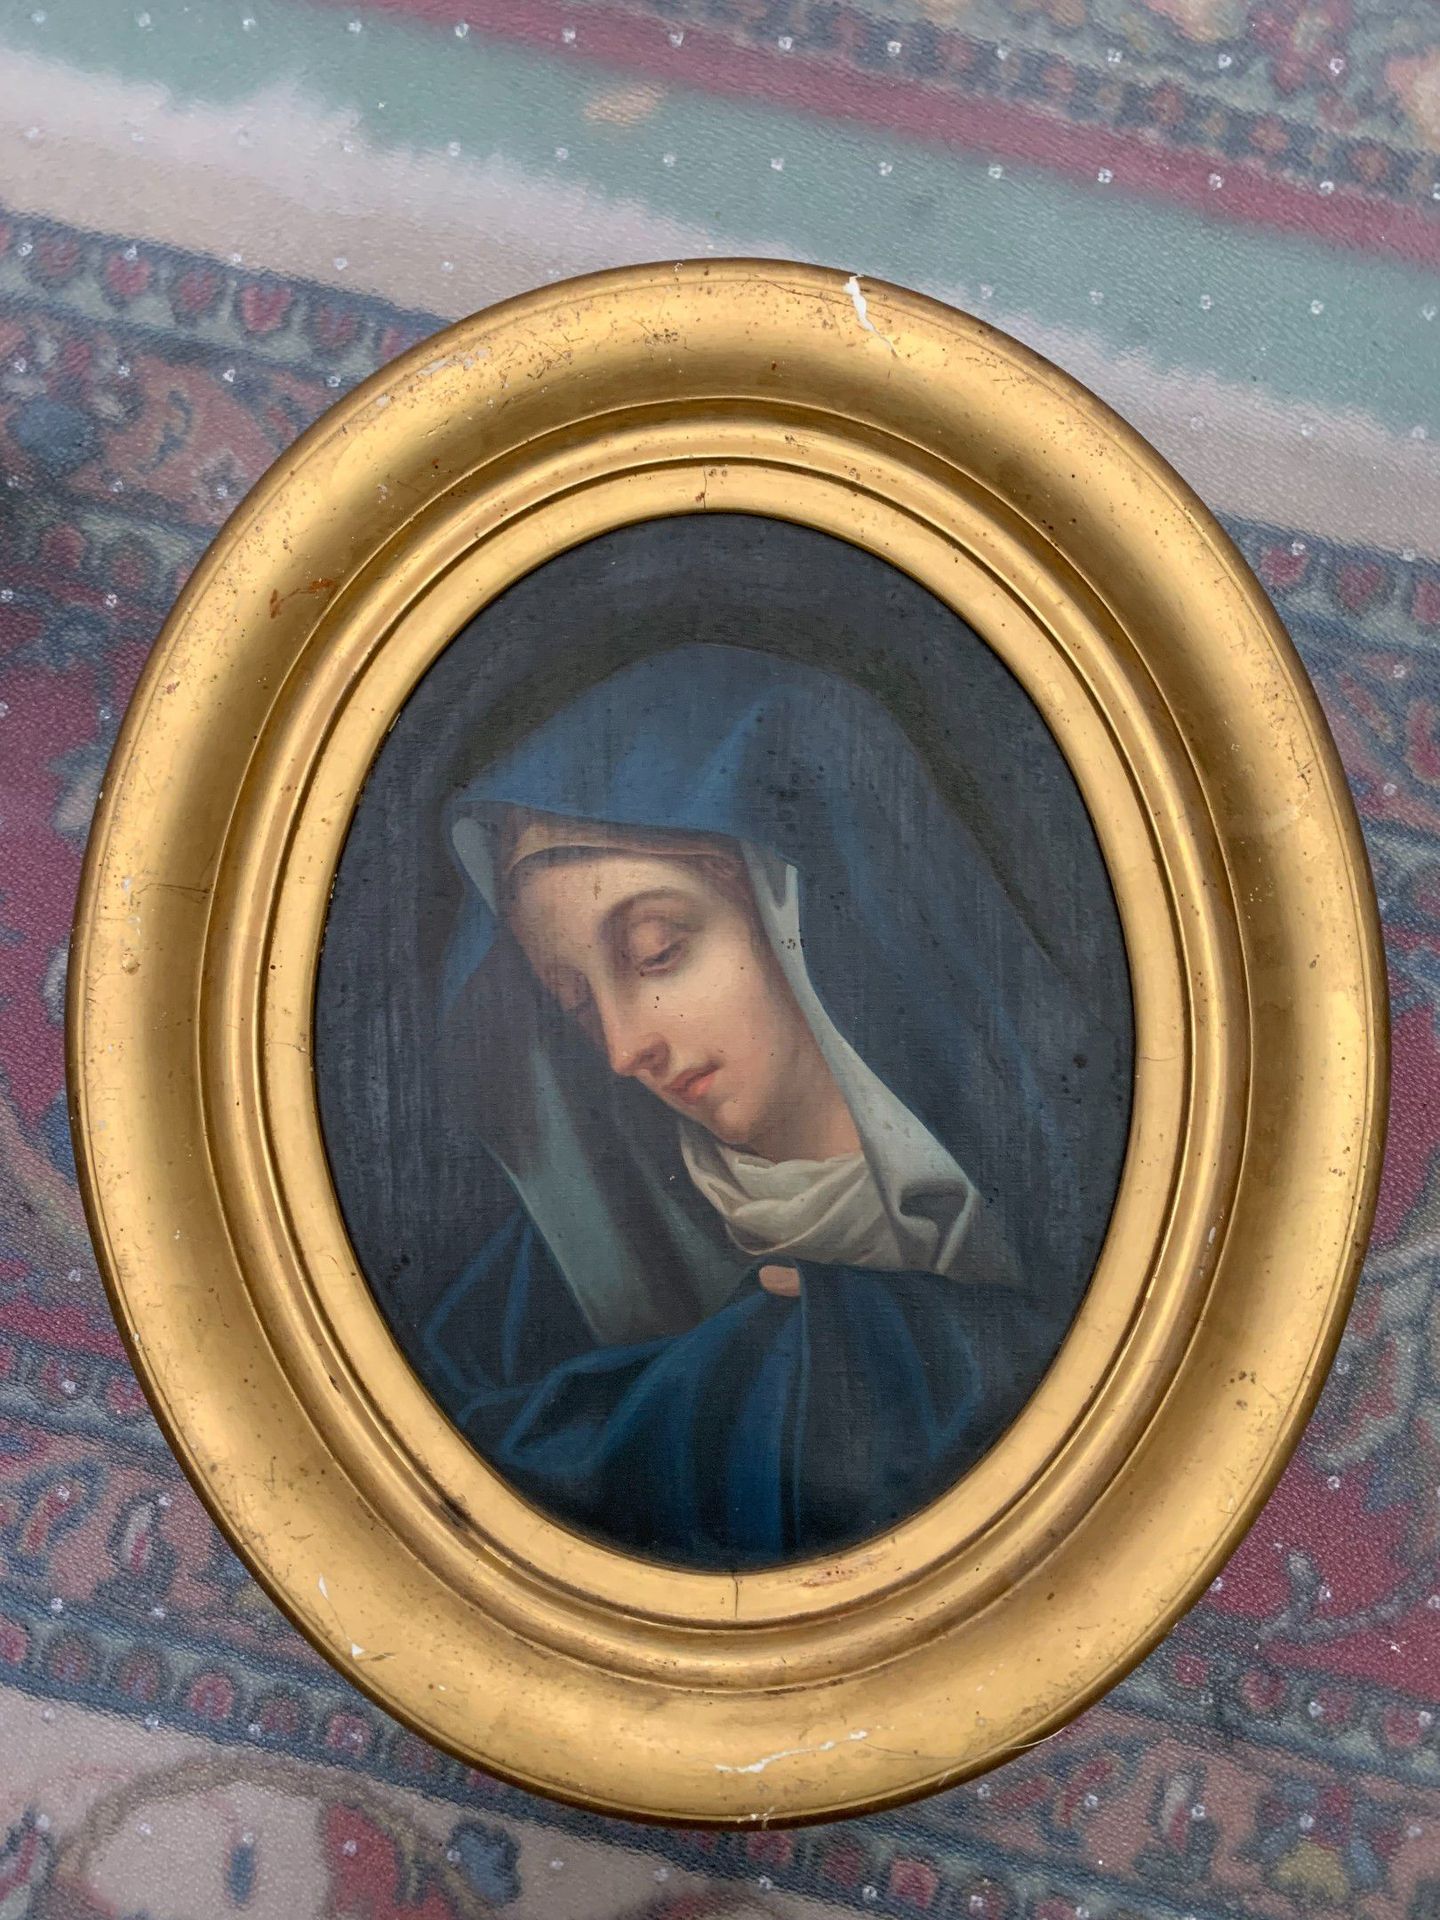 Null 圣母的头像刻在一个椭圆形里。布面油画。镀金的框架。